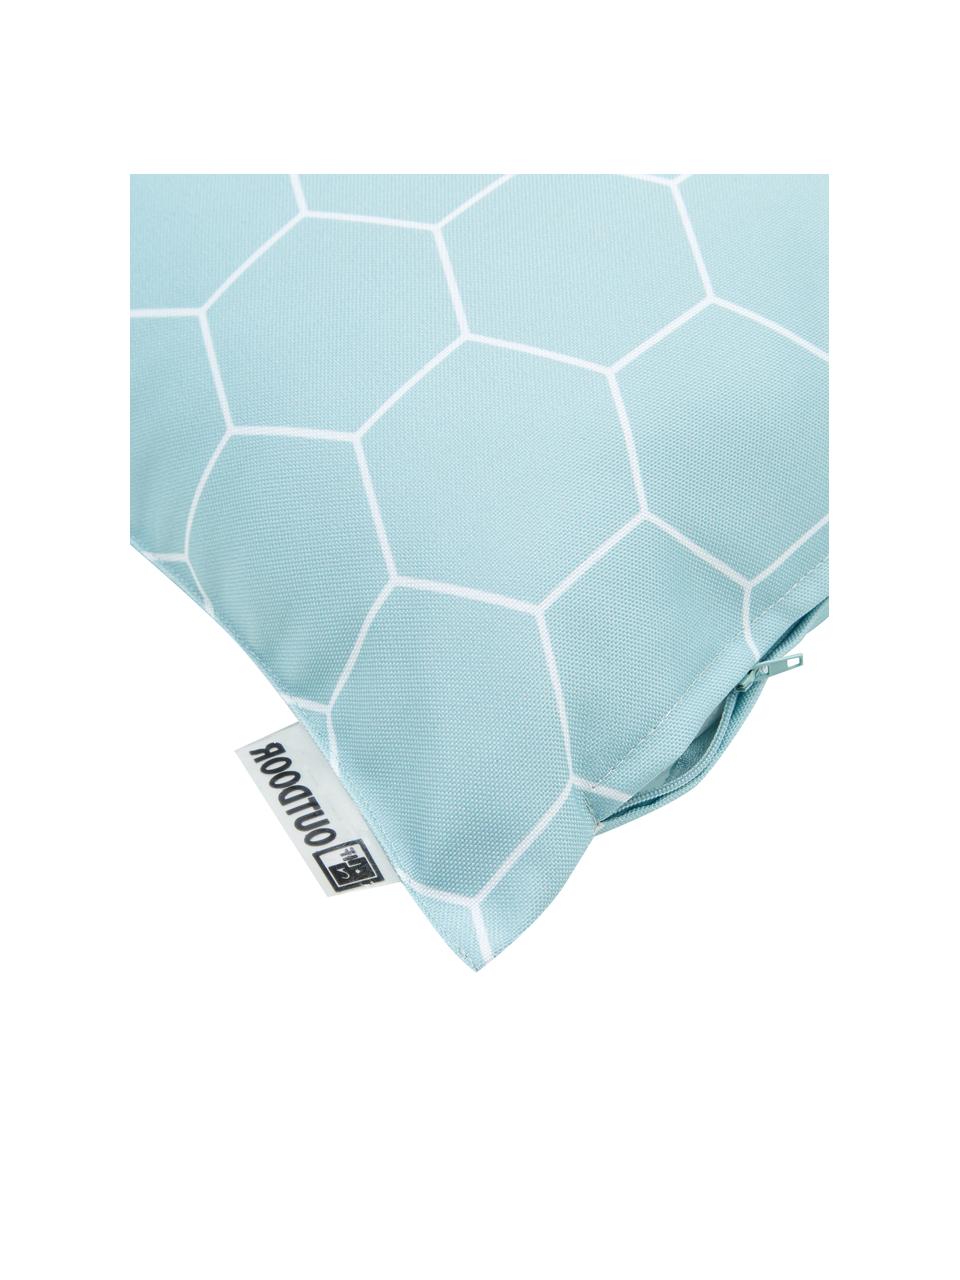 Cuscino da esterno fantasia Honeycomb, 100% poliestere, Blu, bianco, Larg. 47 x Lung. 47 cm